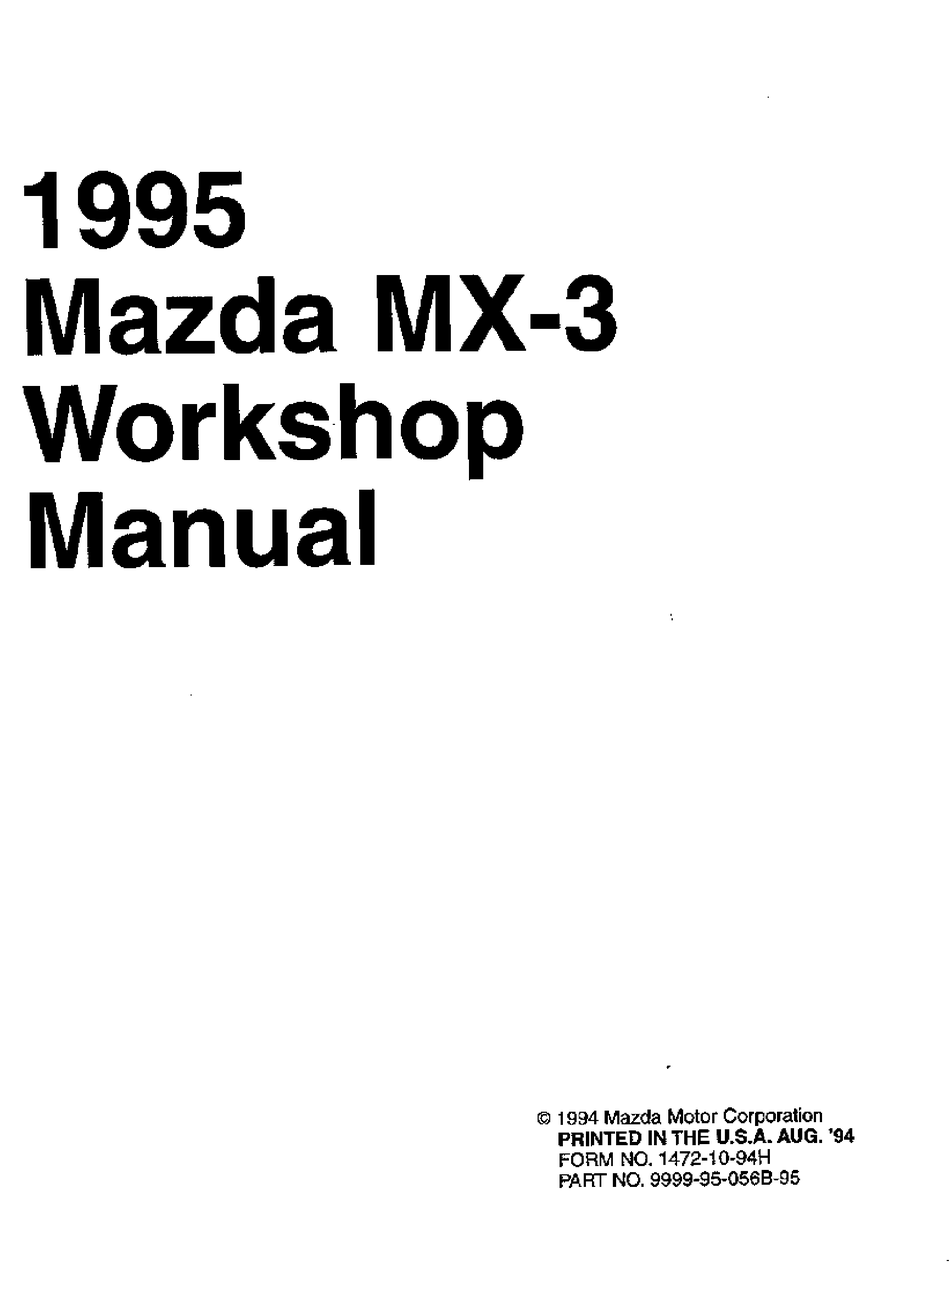 Mazda Mx-3 1995 Workshop Manual Pdf Download | Manualslib